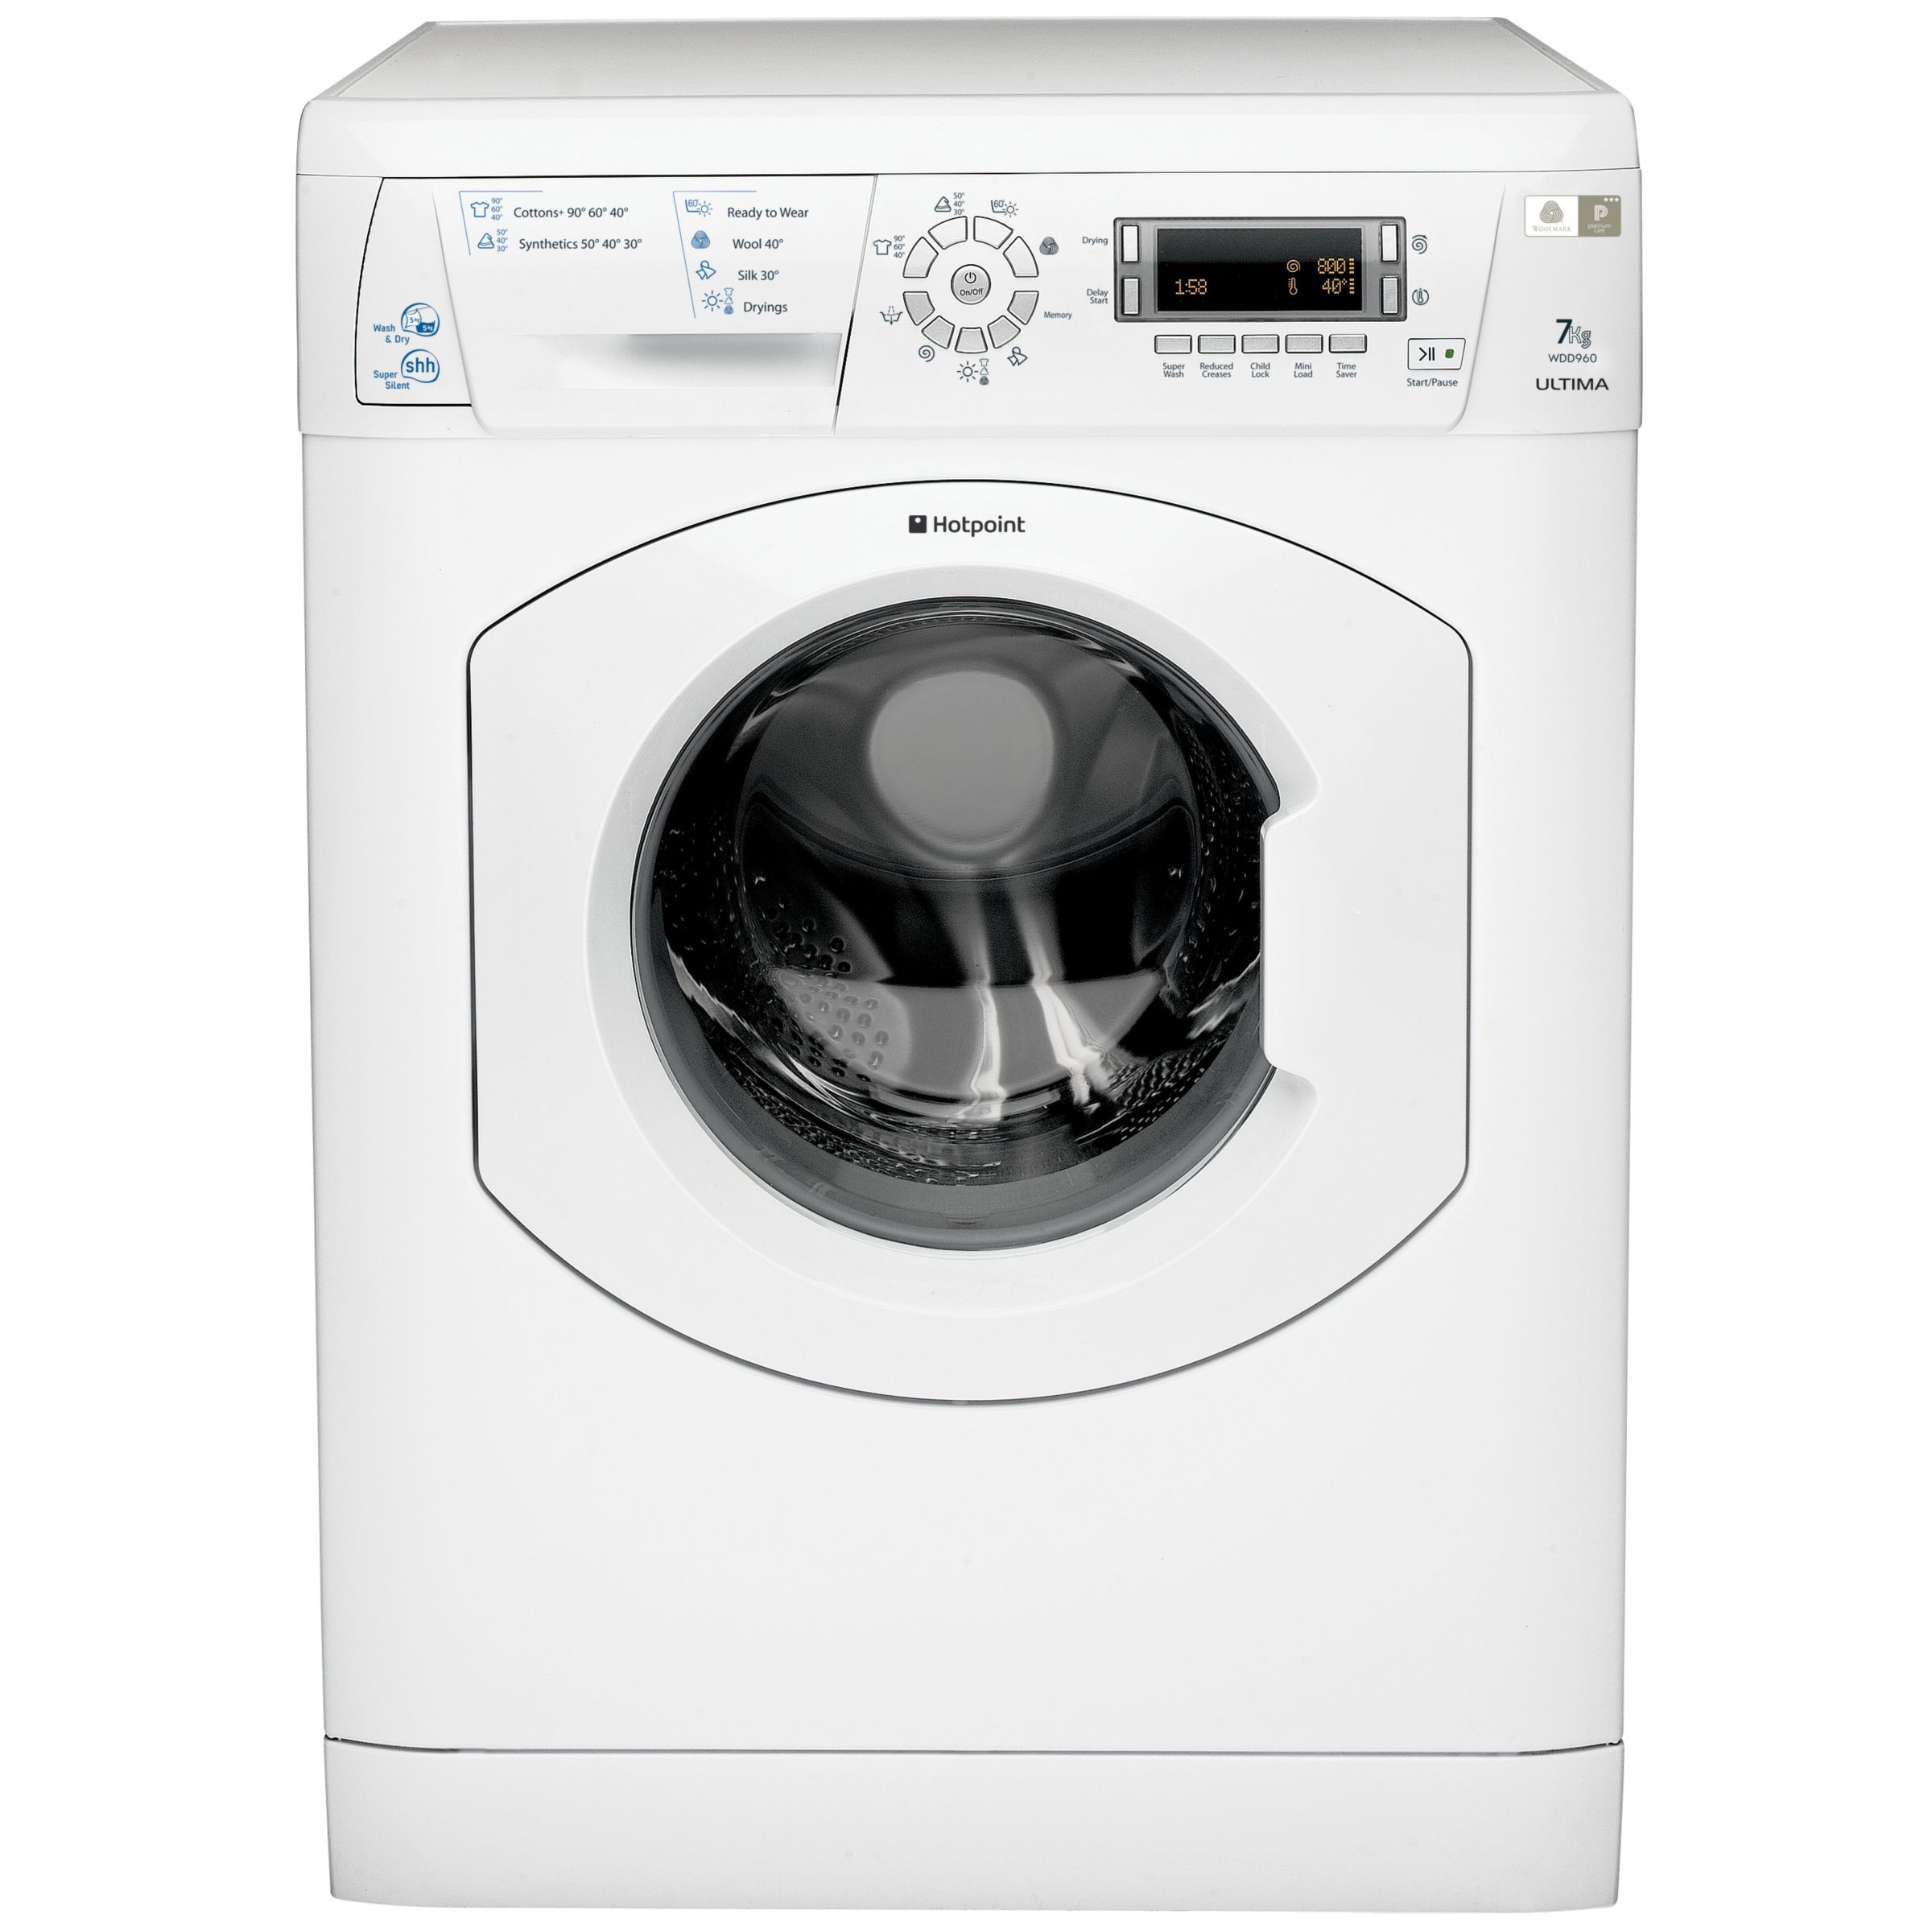 Hotpoint Ultima WDD960P Washer Dryer, White at John Lewis